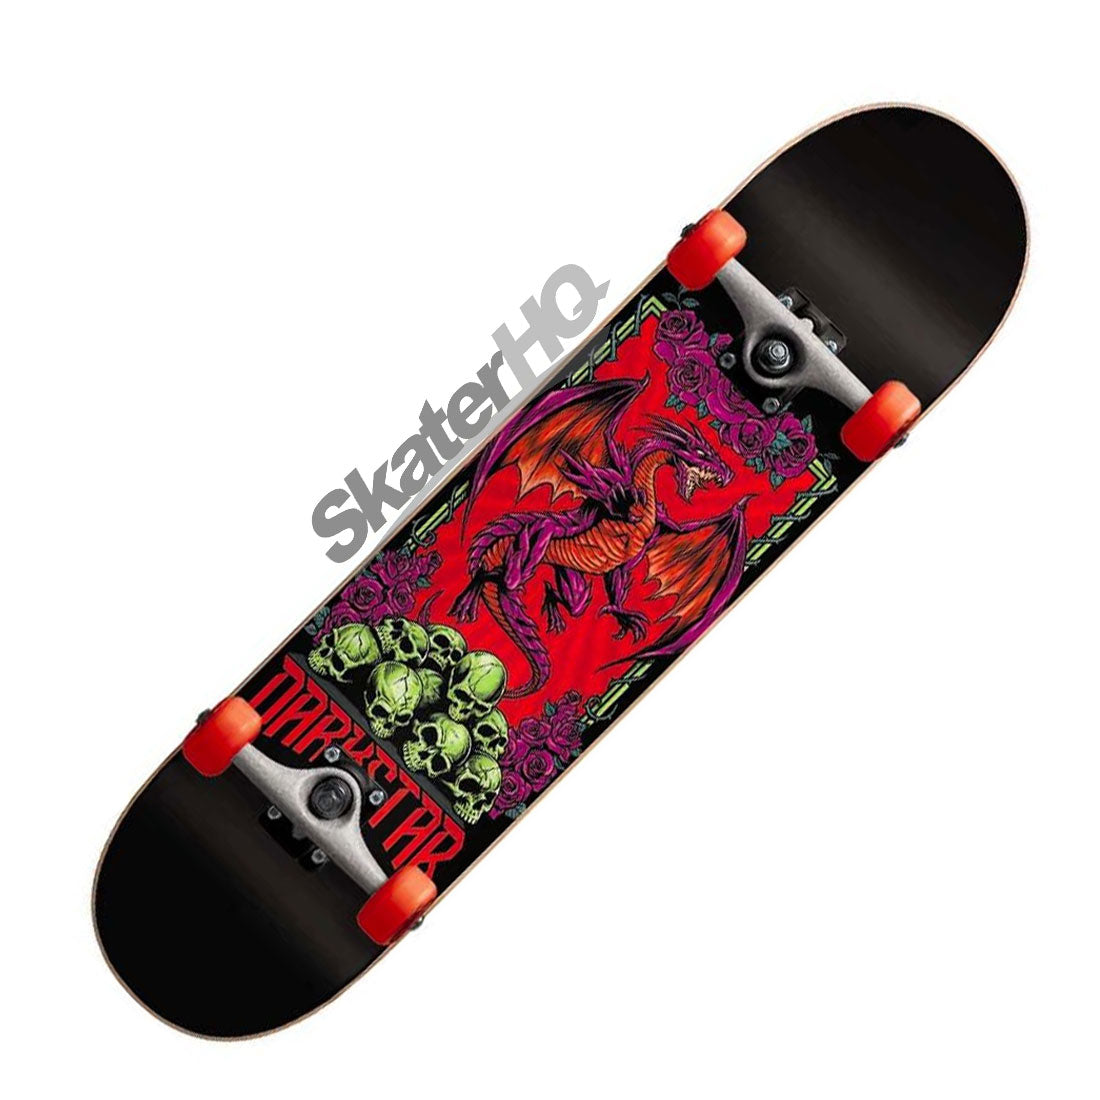 Darkstar Levitate 7.0 Mini Complete - Red Skateboard Completes Modern Street